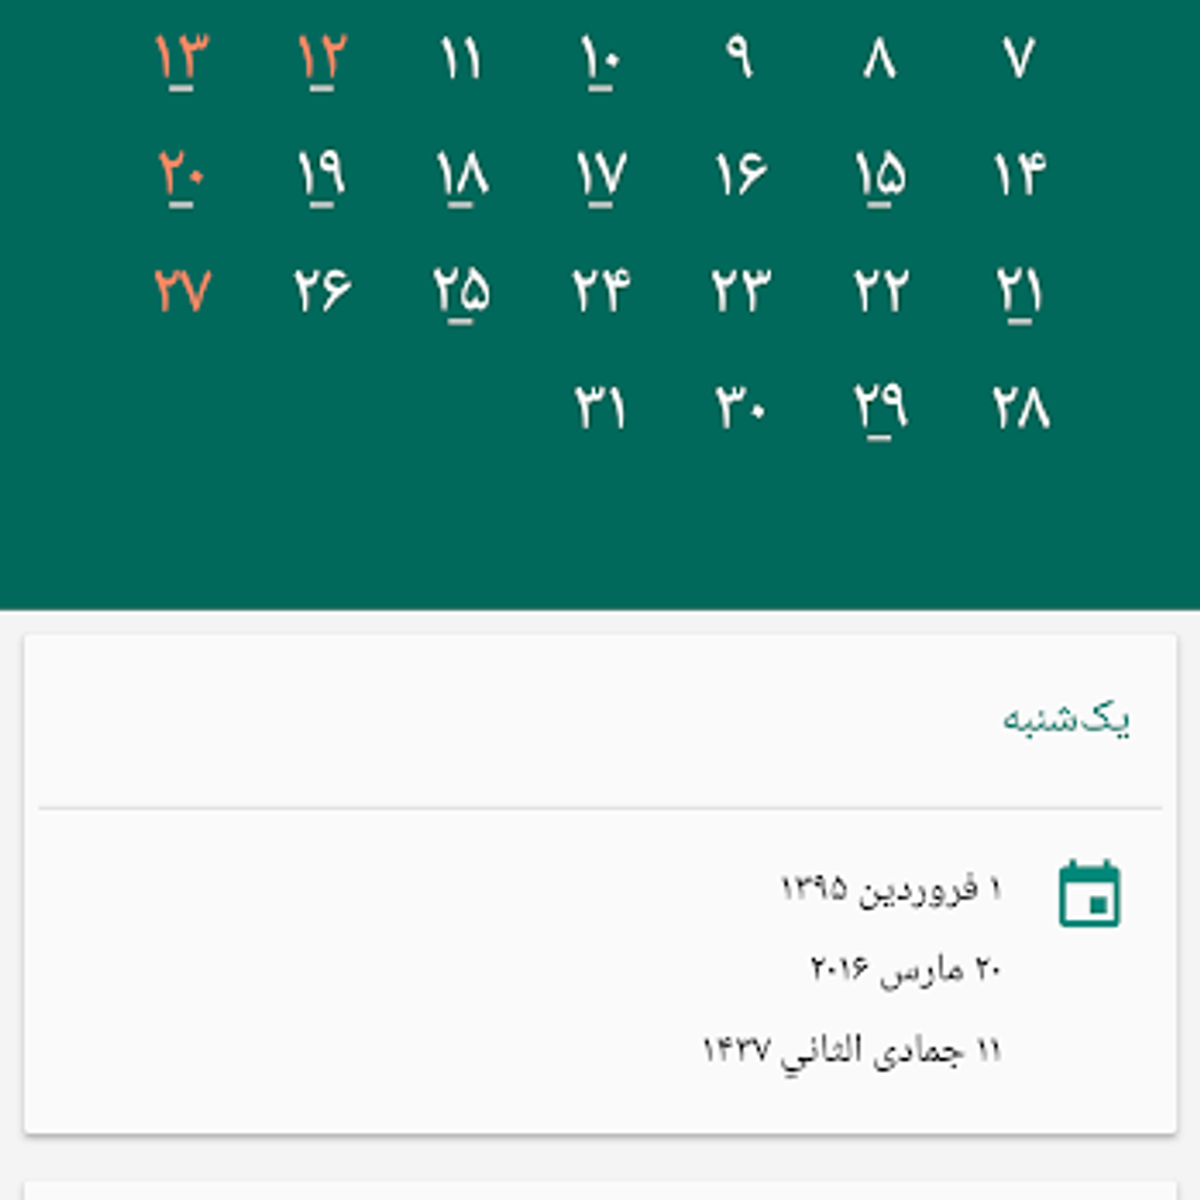 Persian Calendar Alternatives and Similar Apps